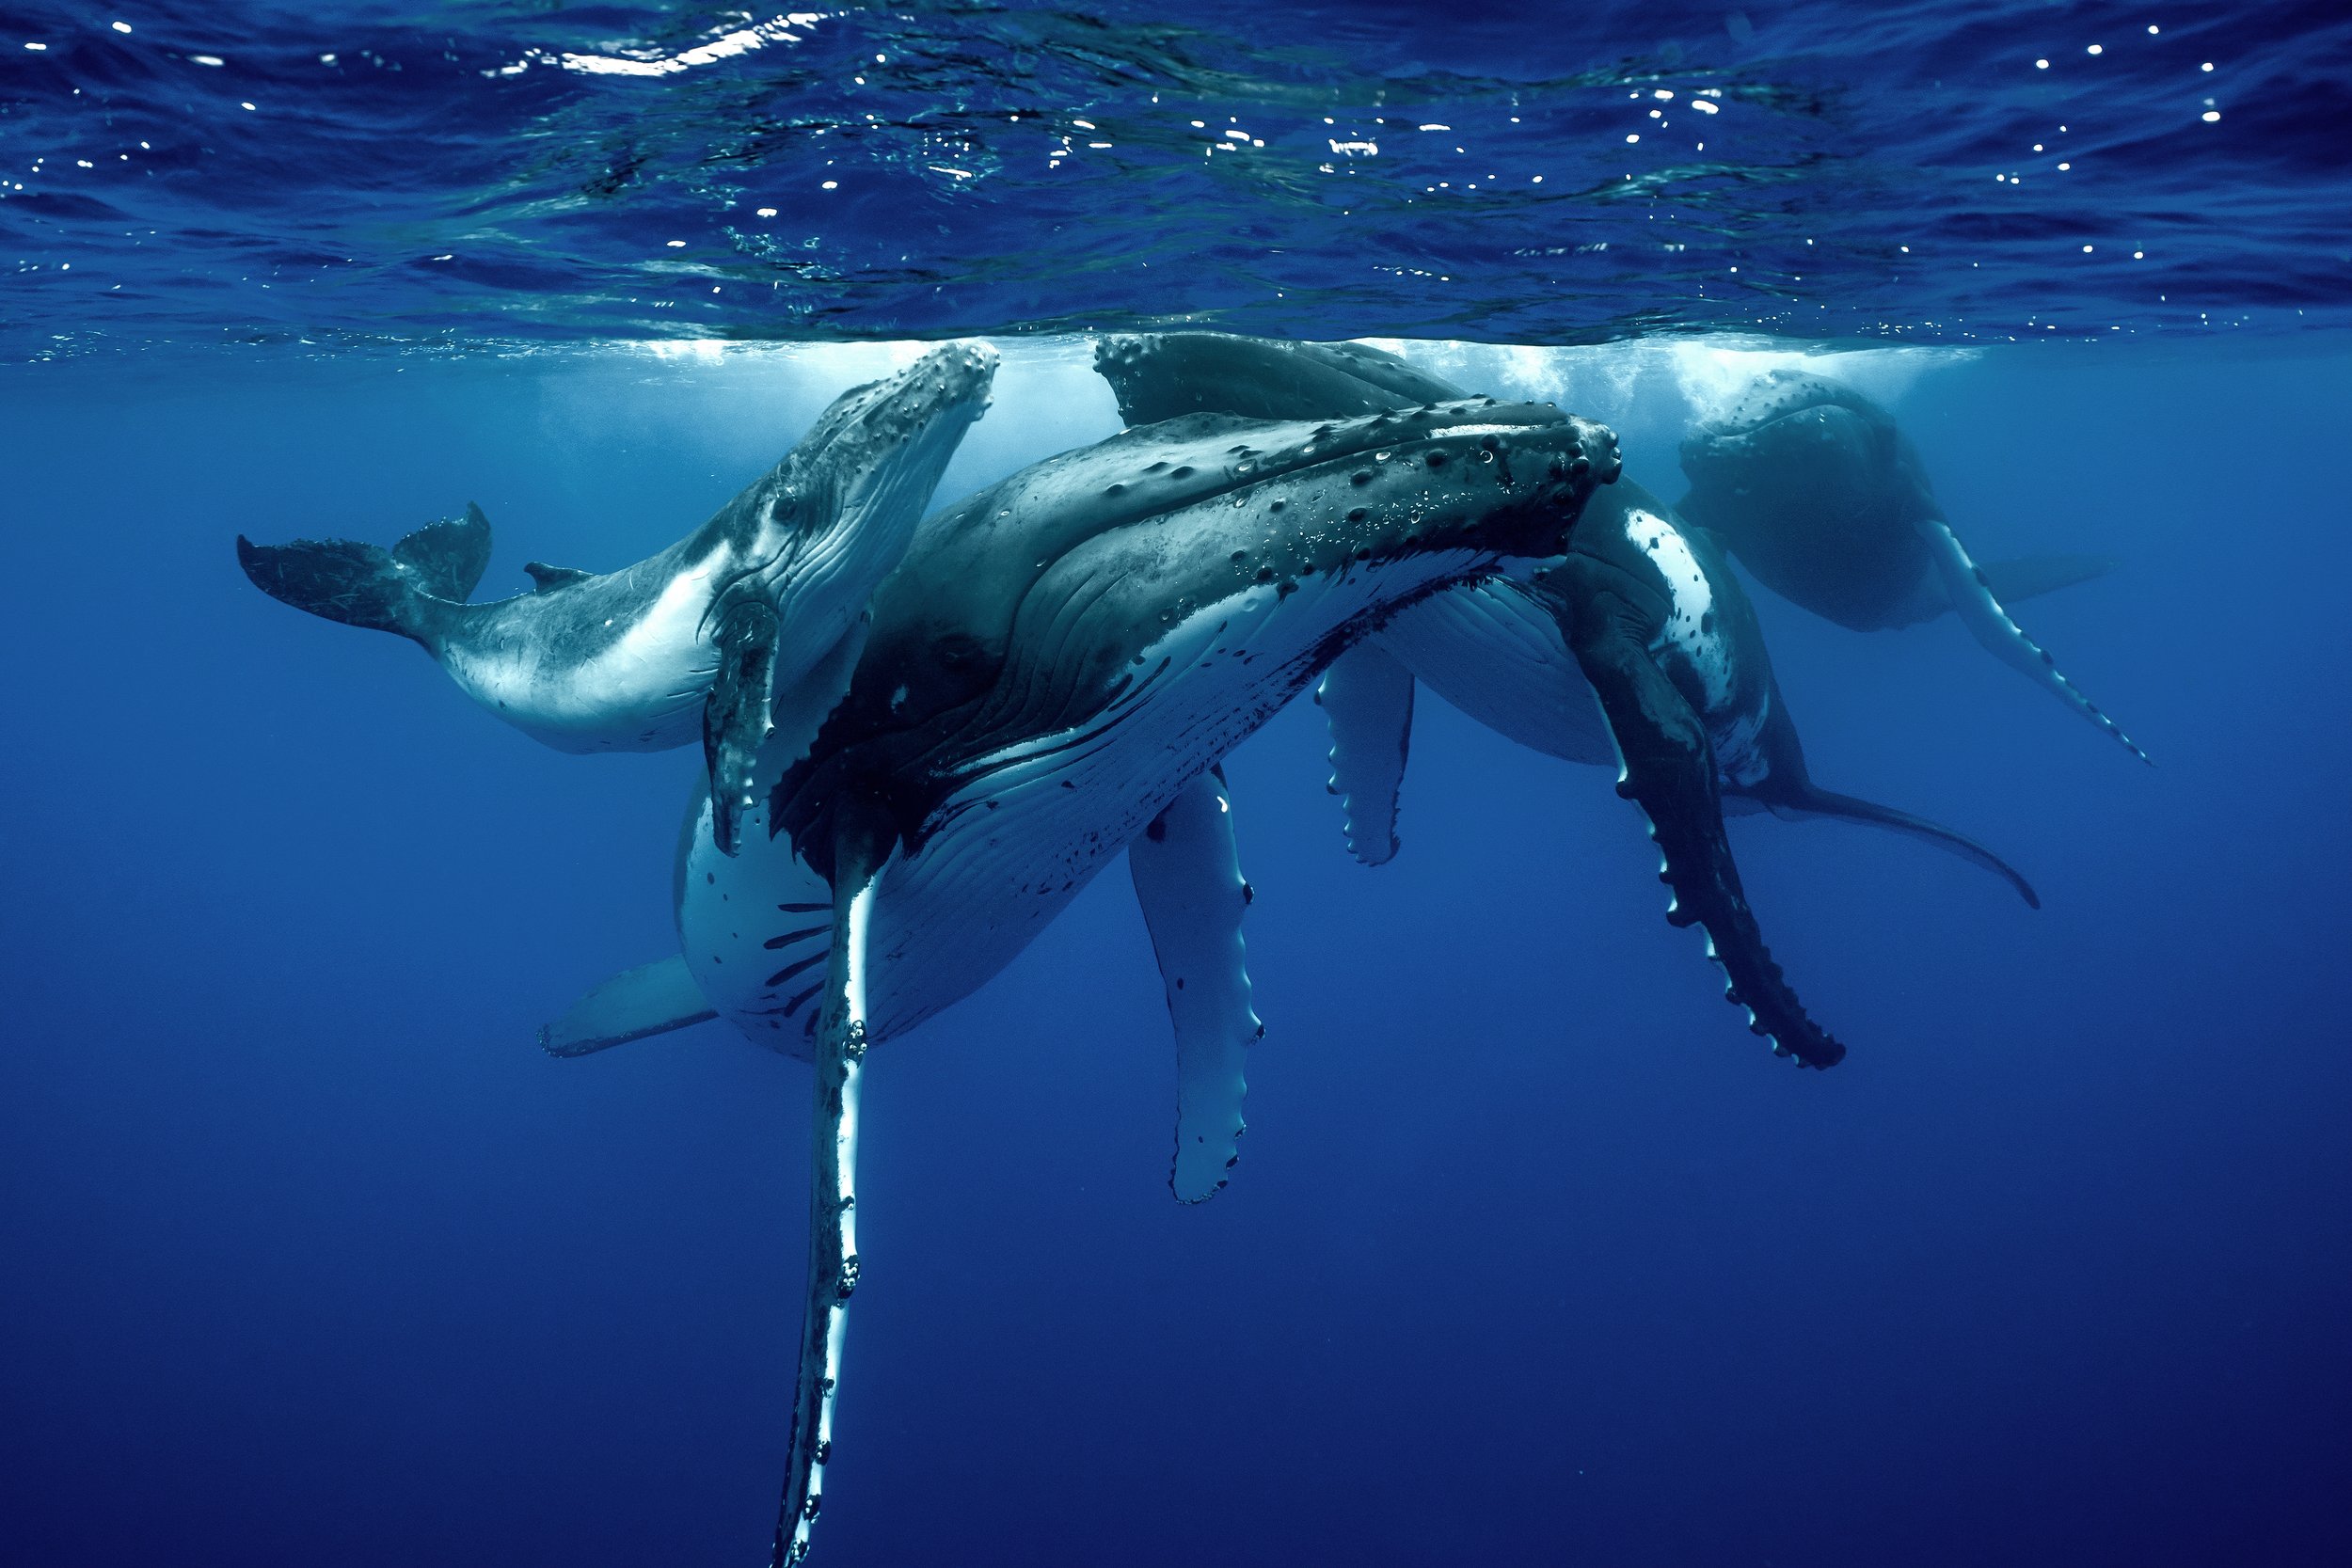 rurutu-2020-inertia-network-matt-reichel-one-with-whales-swim-with-humpback-whales-french-polynesia-week-one-re-edited-250 copy.jpg